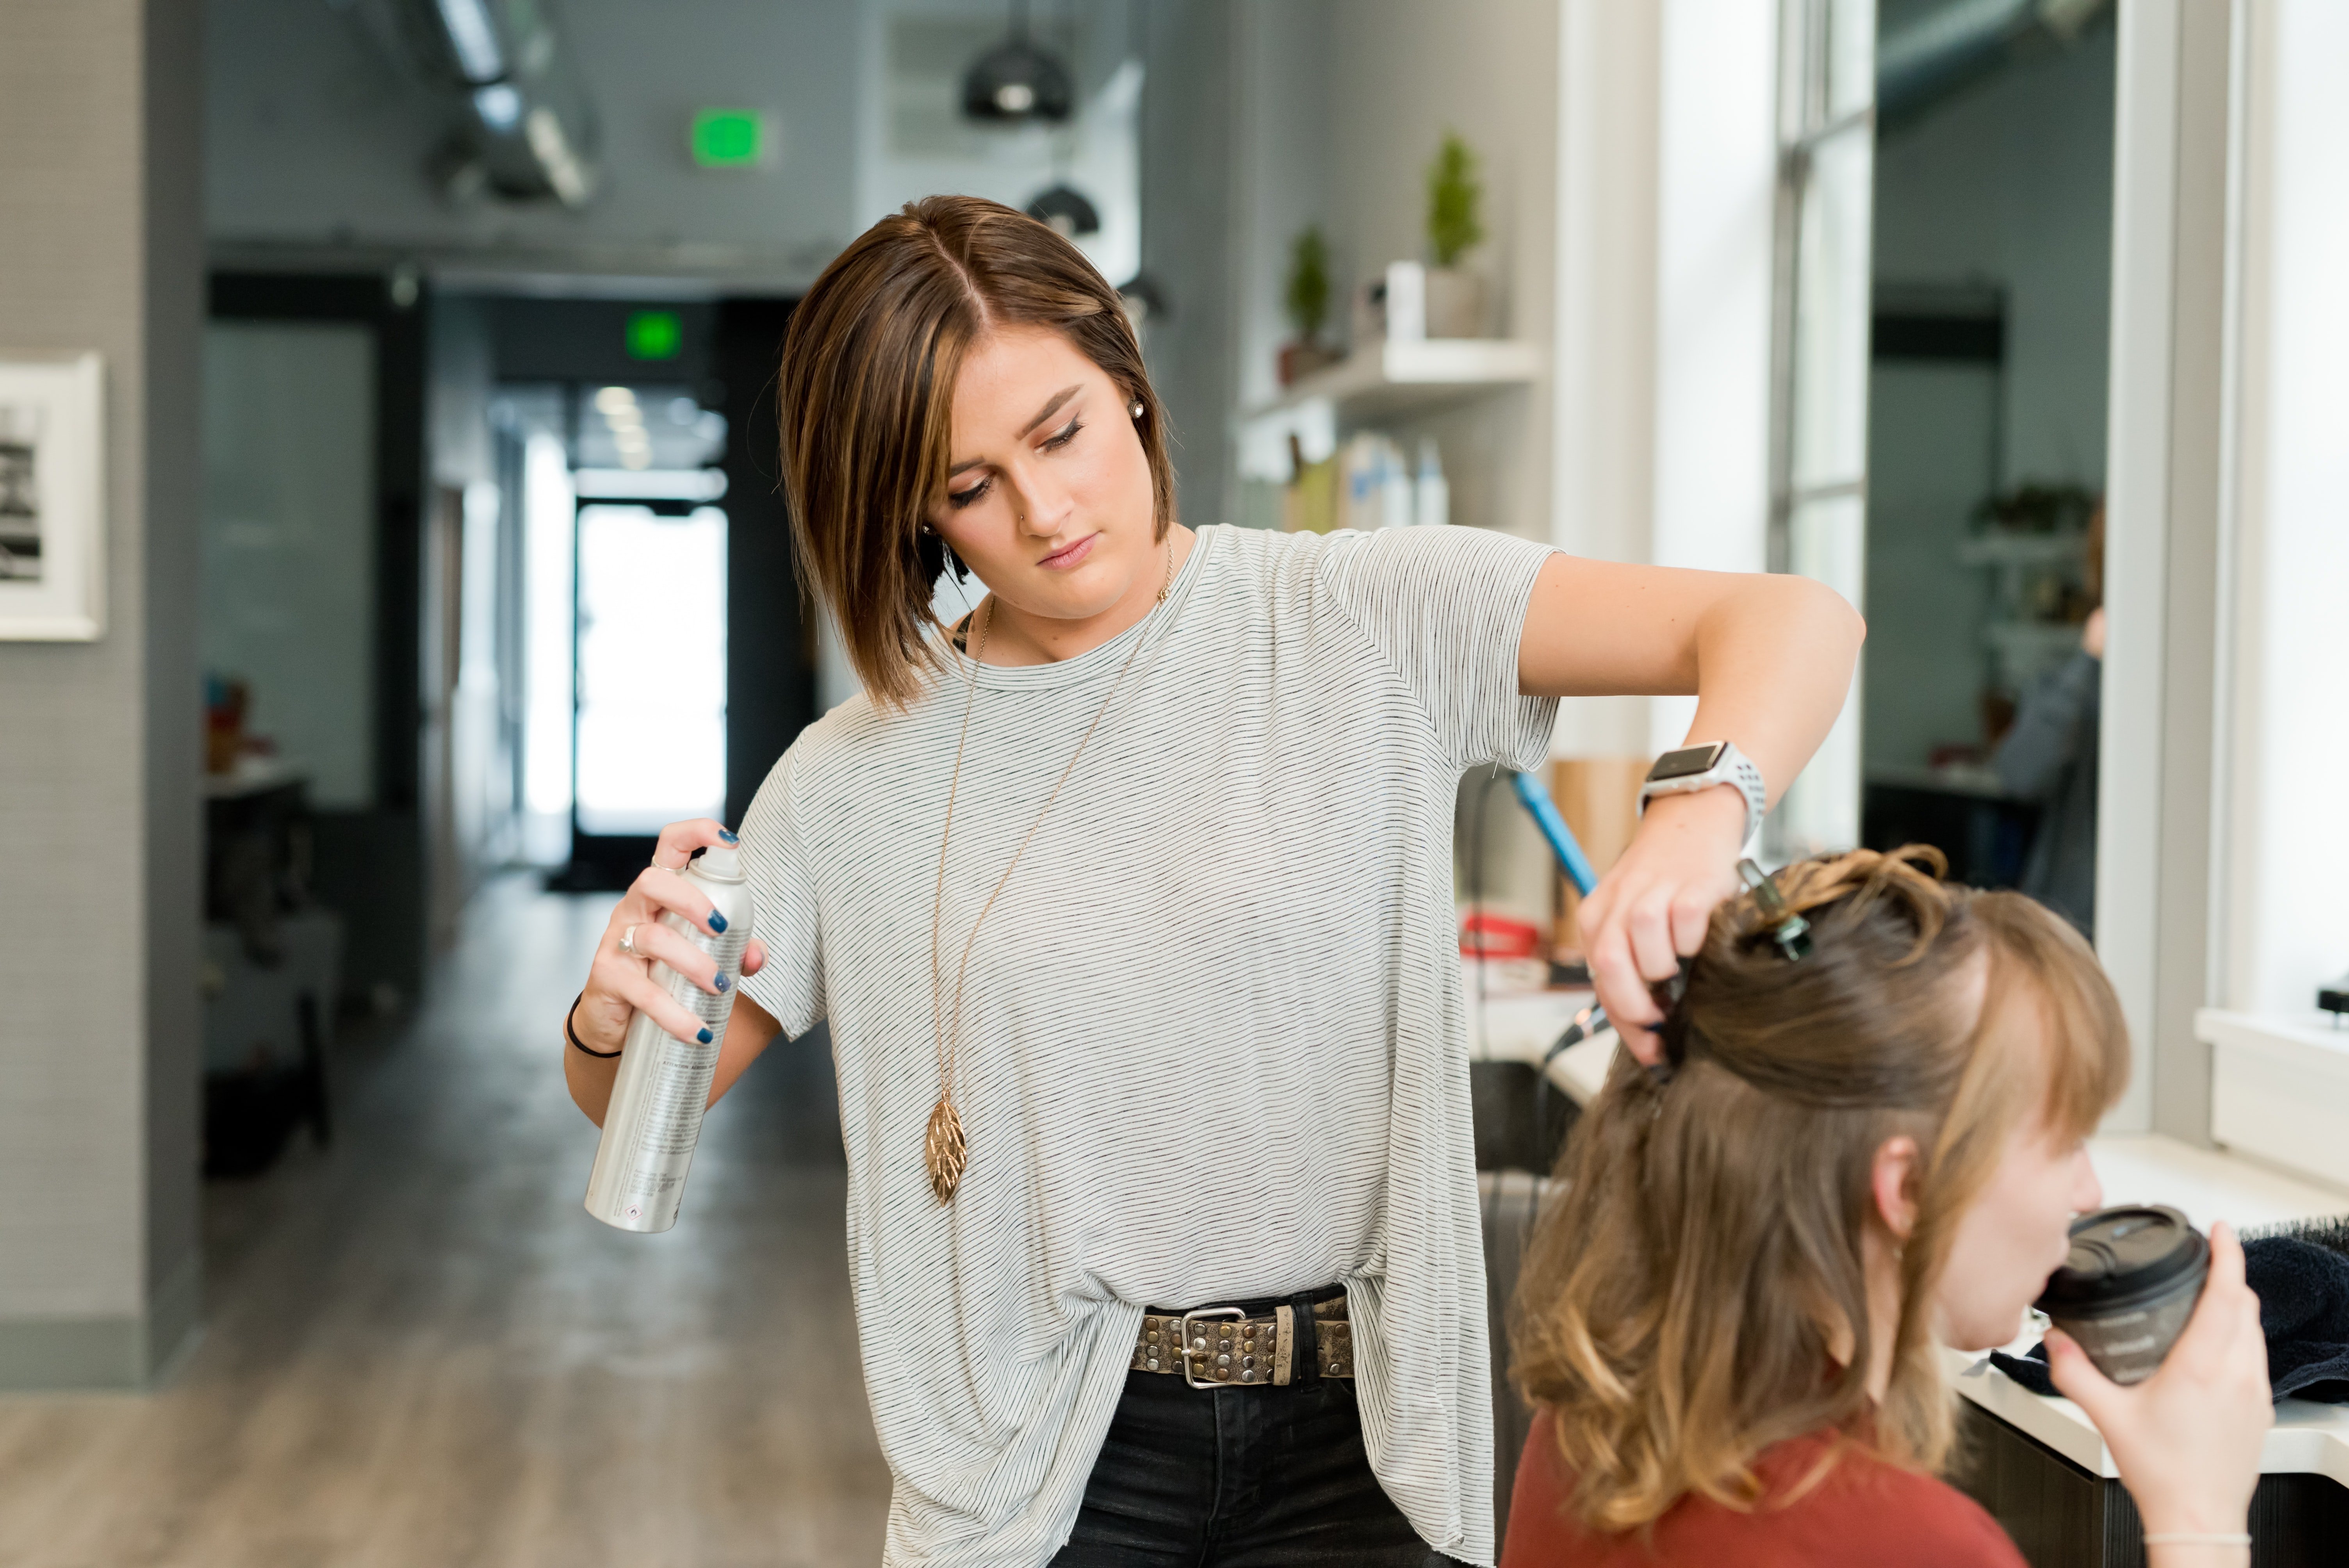 Hair stylist spraying hair spray on client | Unsplash 